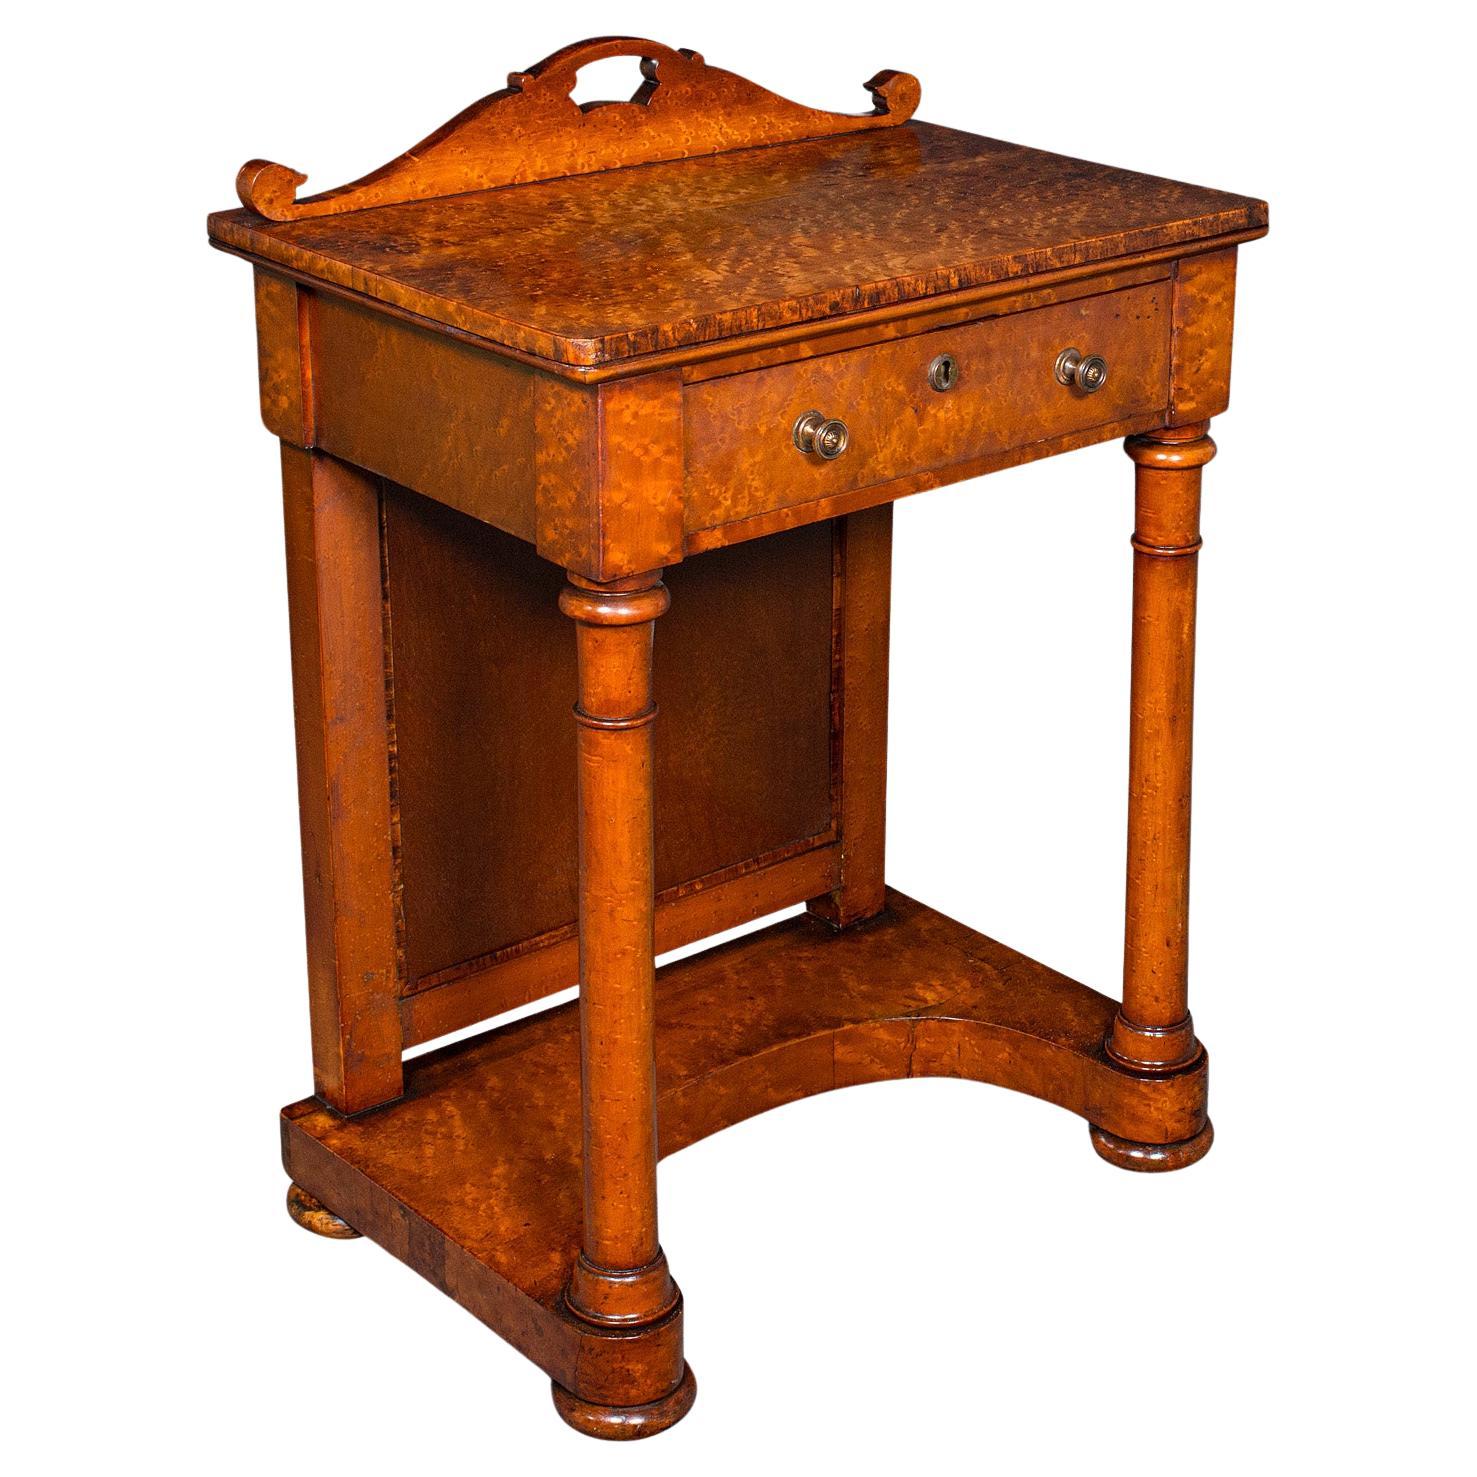 Antique Ship's Purser's Desk, English, Writing Table, Beidermeier, Victorian